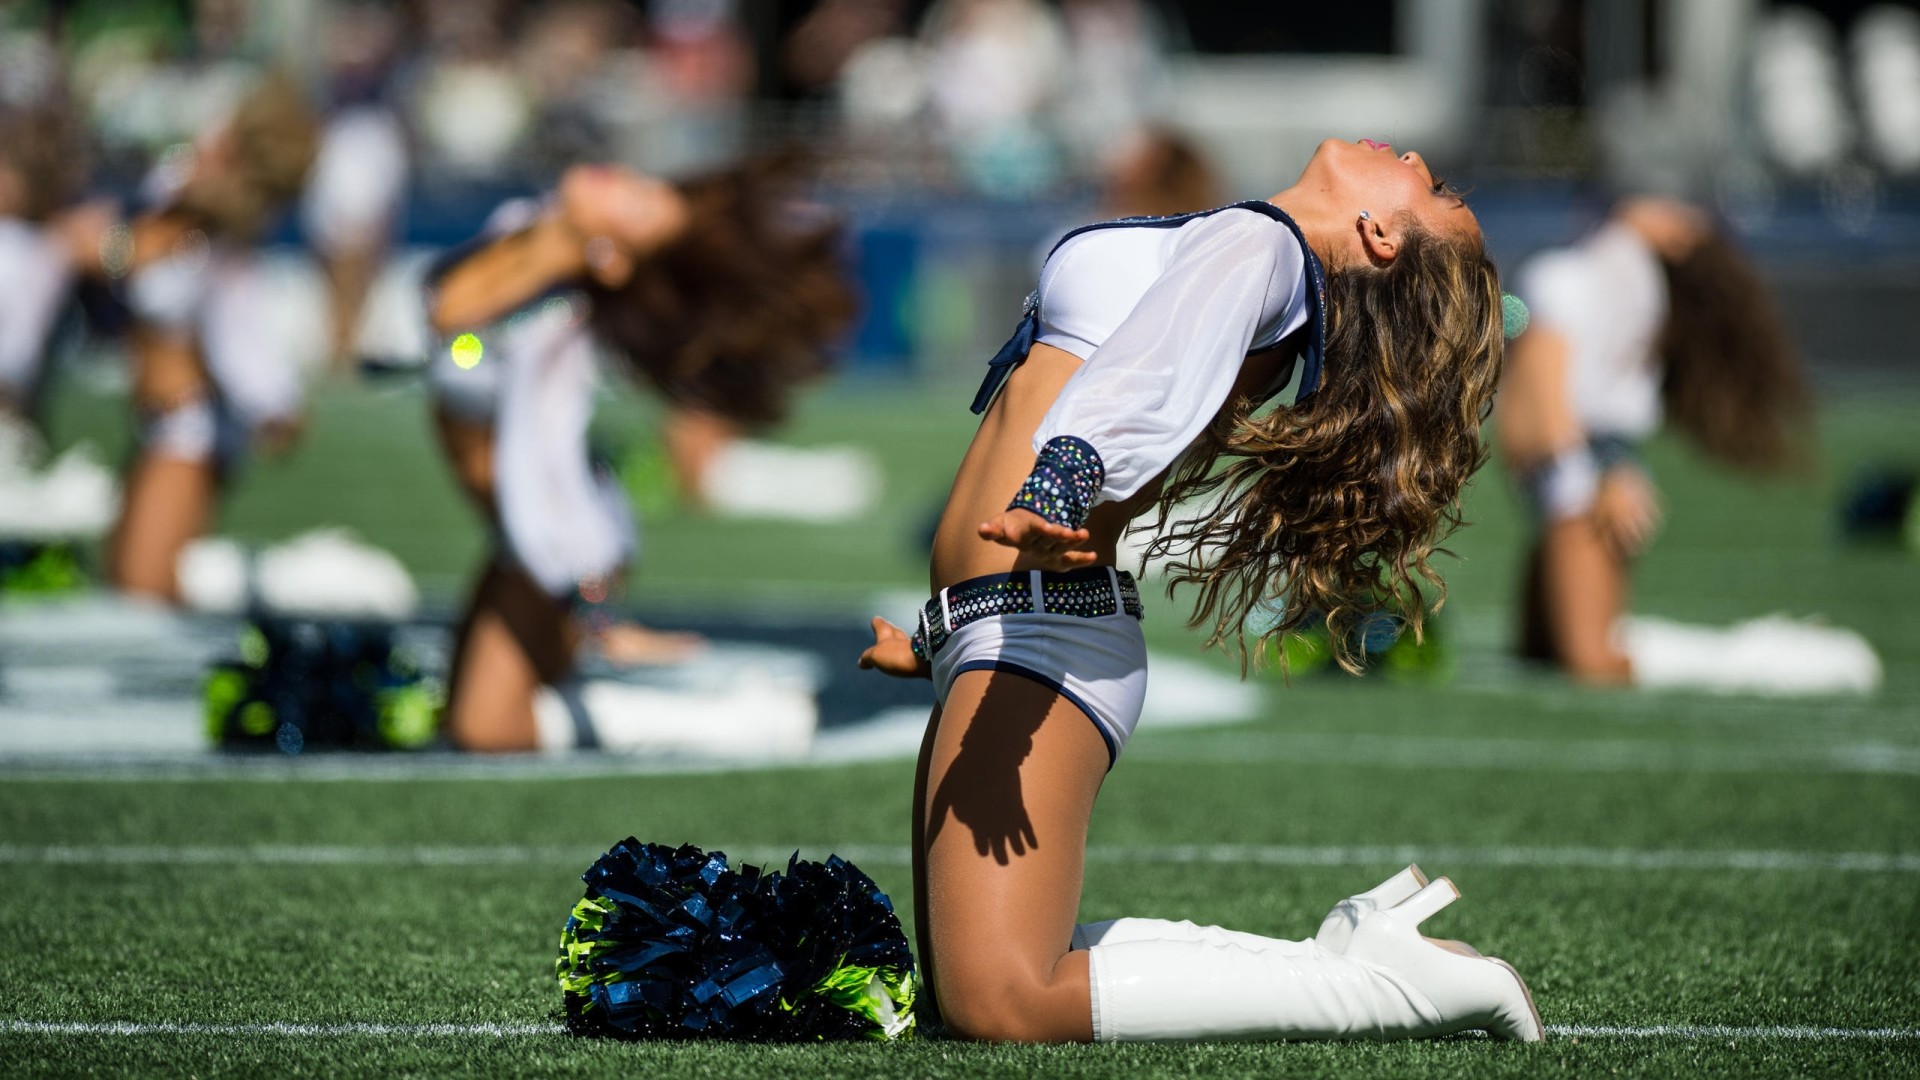 Cheerleaders NFL Seattle Seahawks Uniform Skinny Women Long Hair Boots American Football Tights Lips 1920x1080